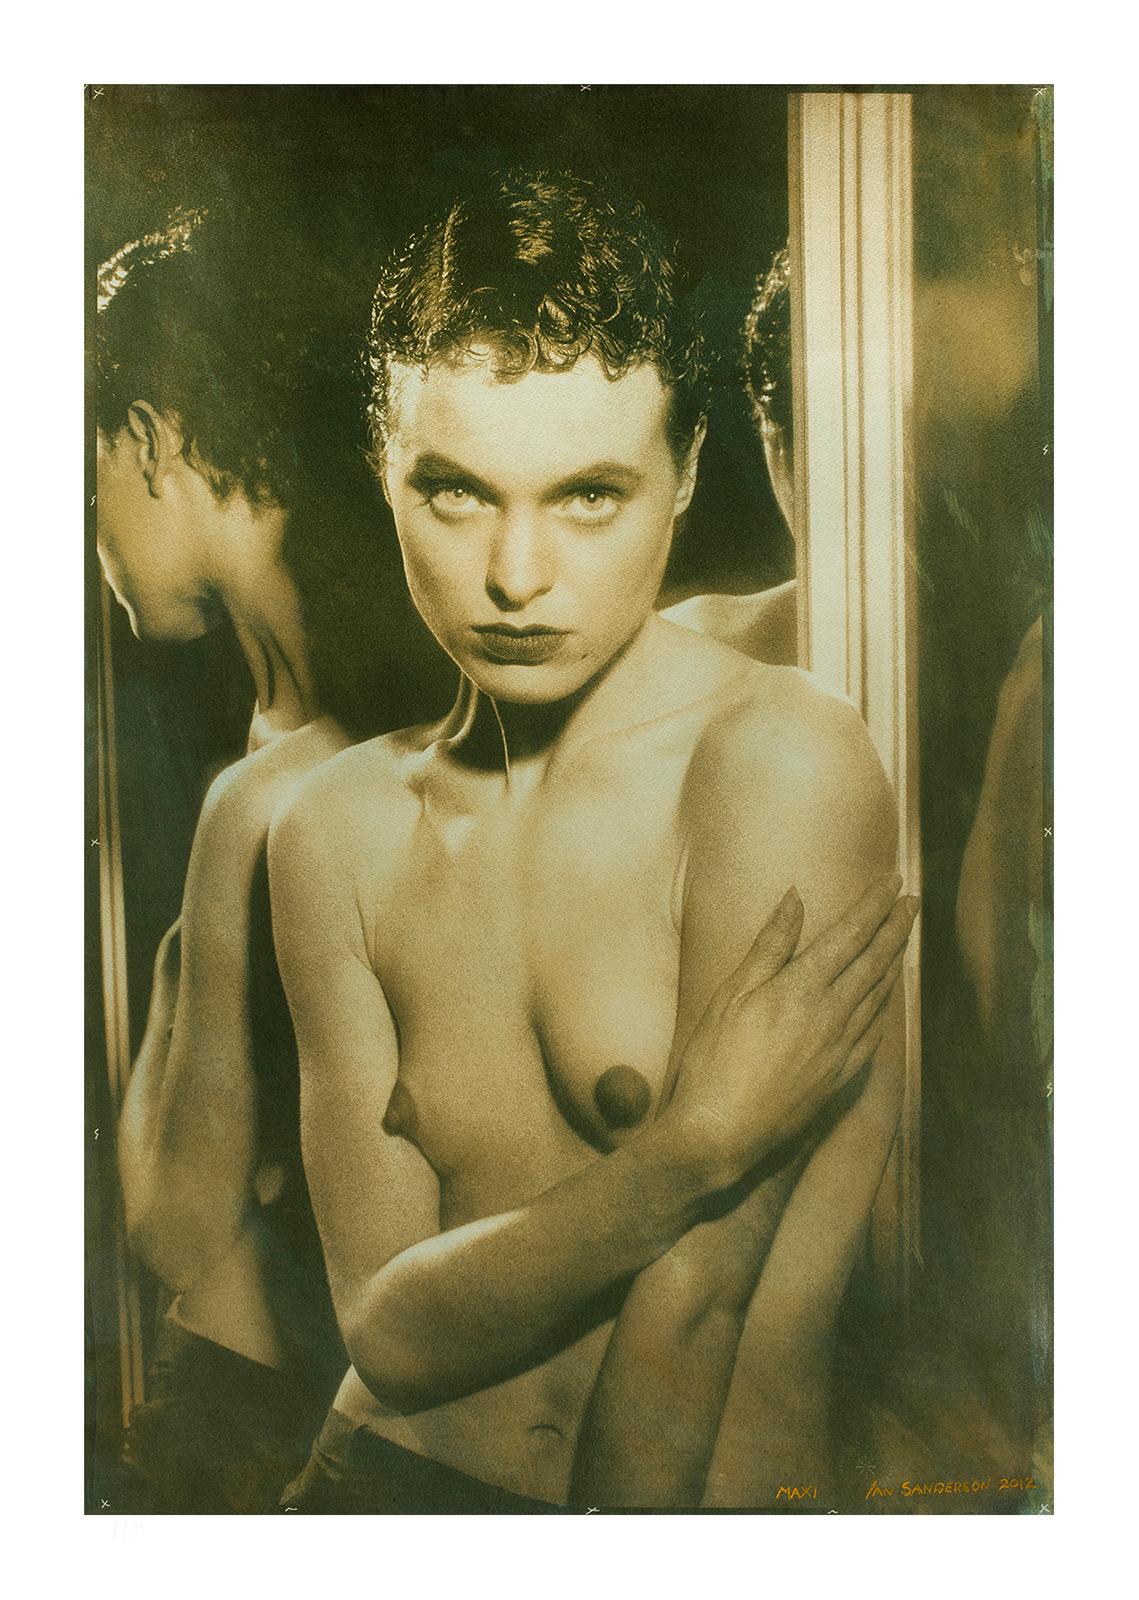 Ian Sanderson Portrait Photograph - Maxi - Signed limited edition fine art print, Contemporary Oversized nude photo 